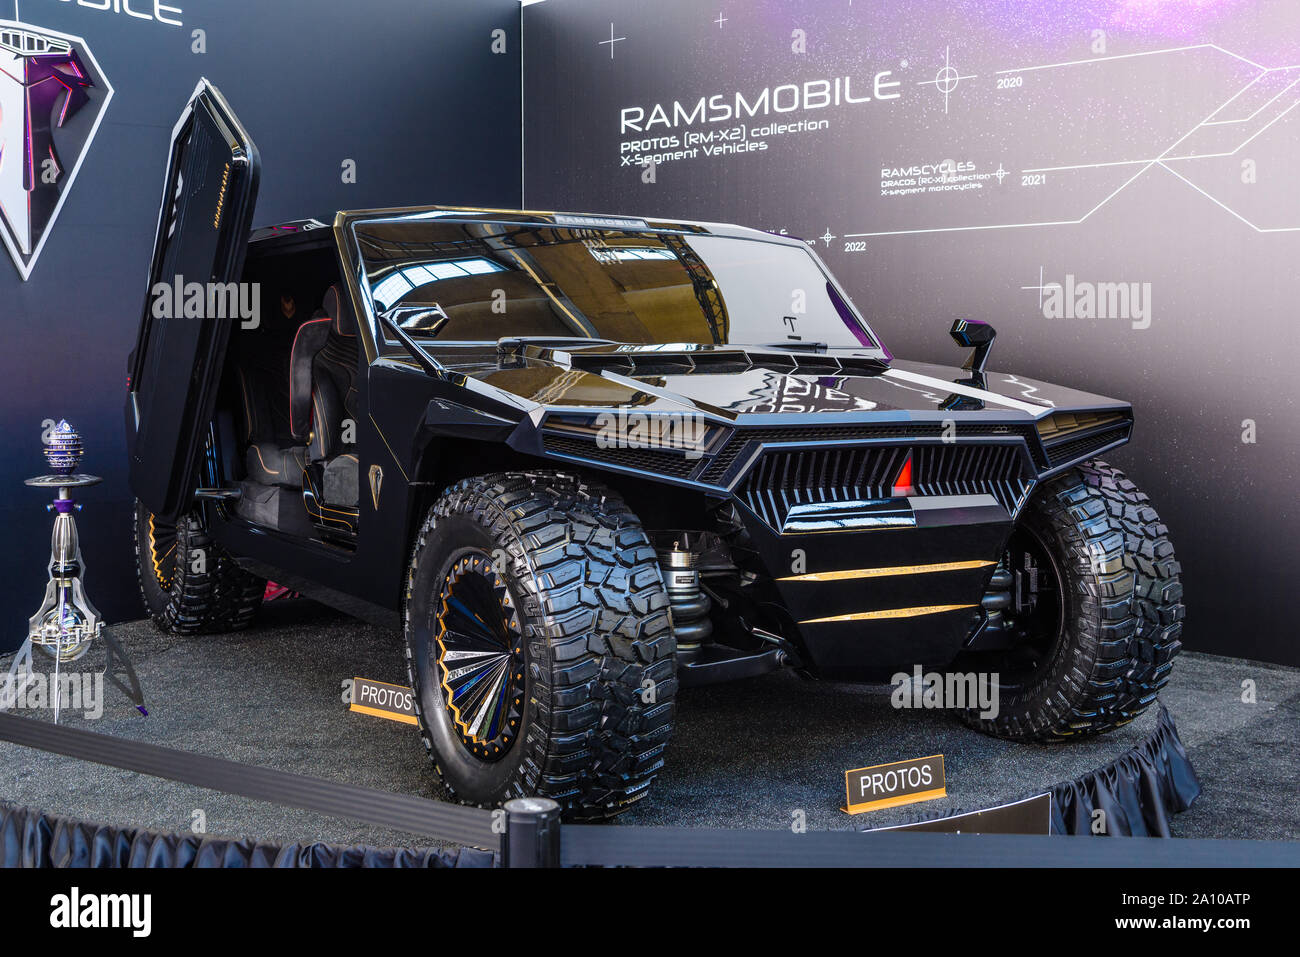 FRANKFURT, GERMANY - SEPT 2019: black RAMSMOBILE RM-X2 based on HUMVEE HUMMER H1, IAA International Motor Show Auto Exhibtion. Stock Photo